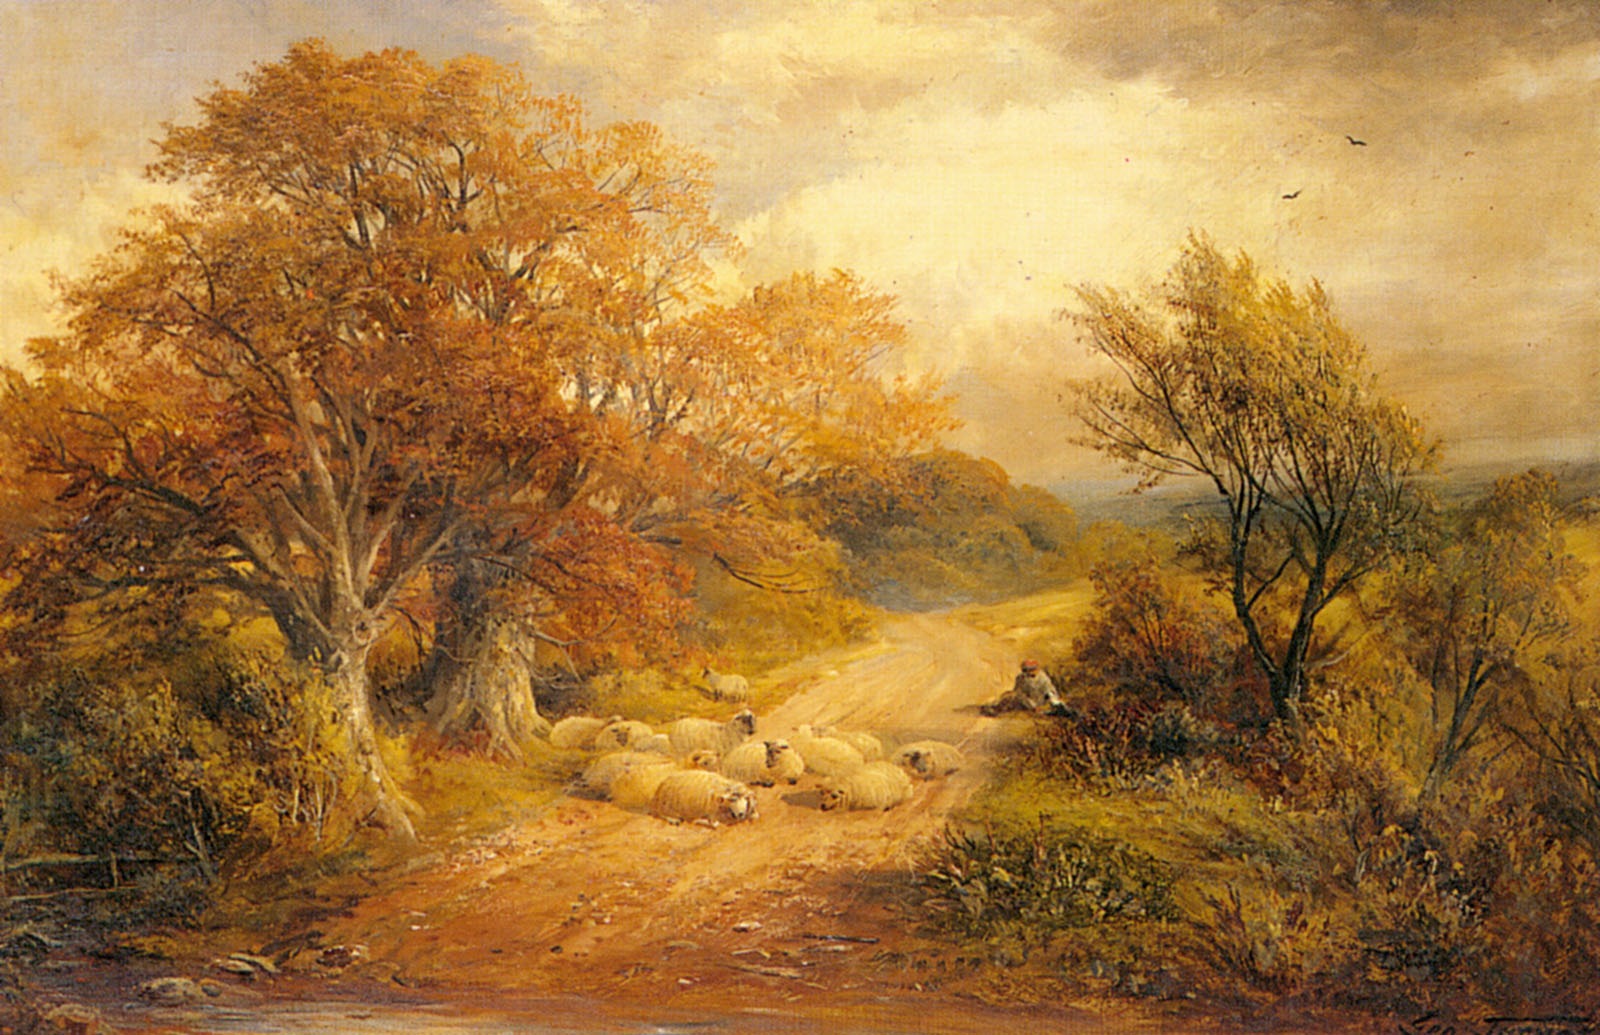 Painting of George Turner artist, George Turner paintings